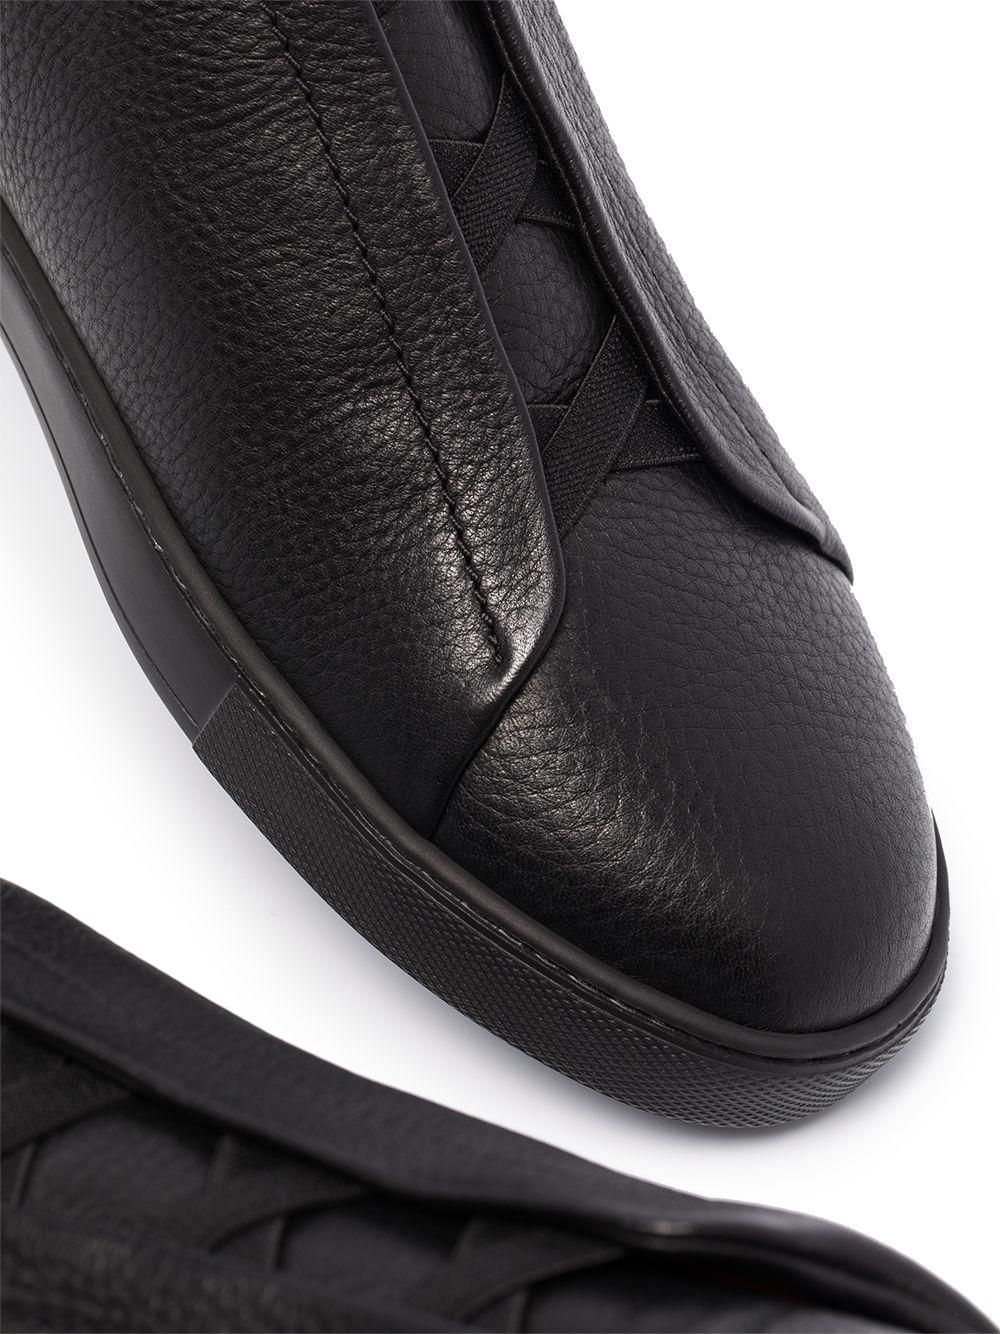 Ermenegildo Zegna Leather Triple Stitch Sneakers in Black for Men - Lyst